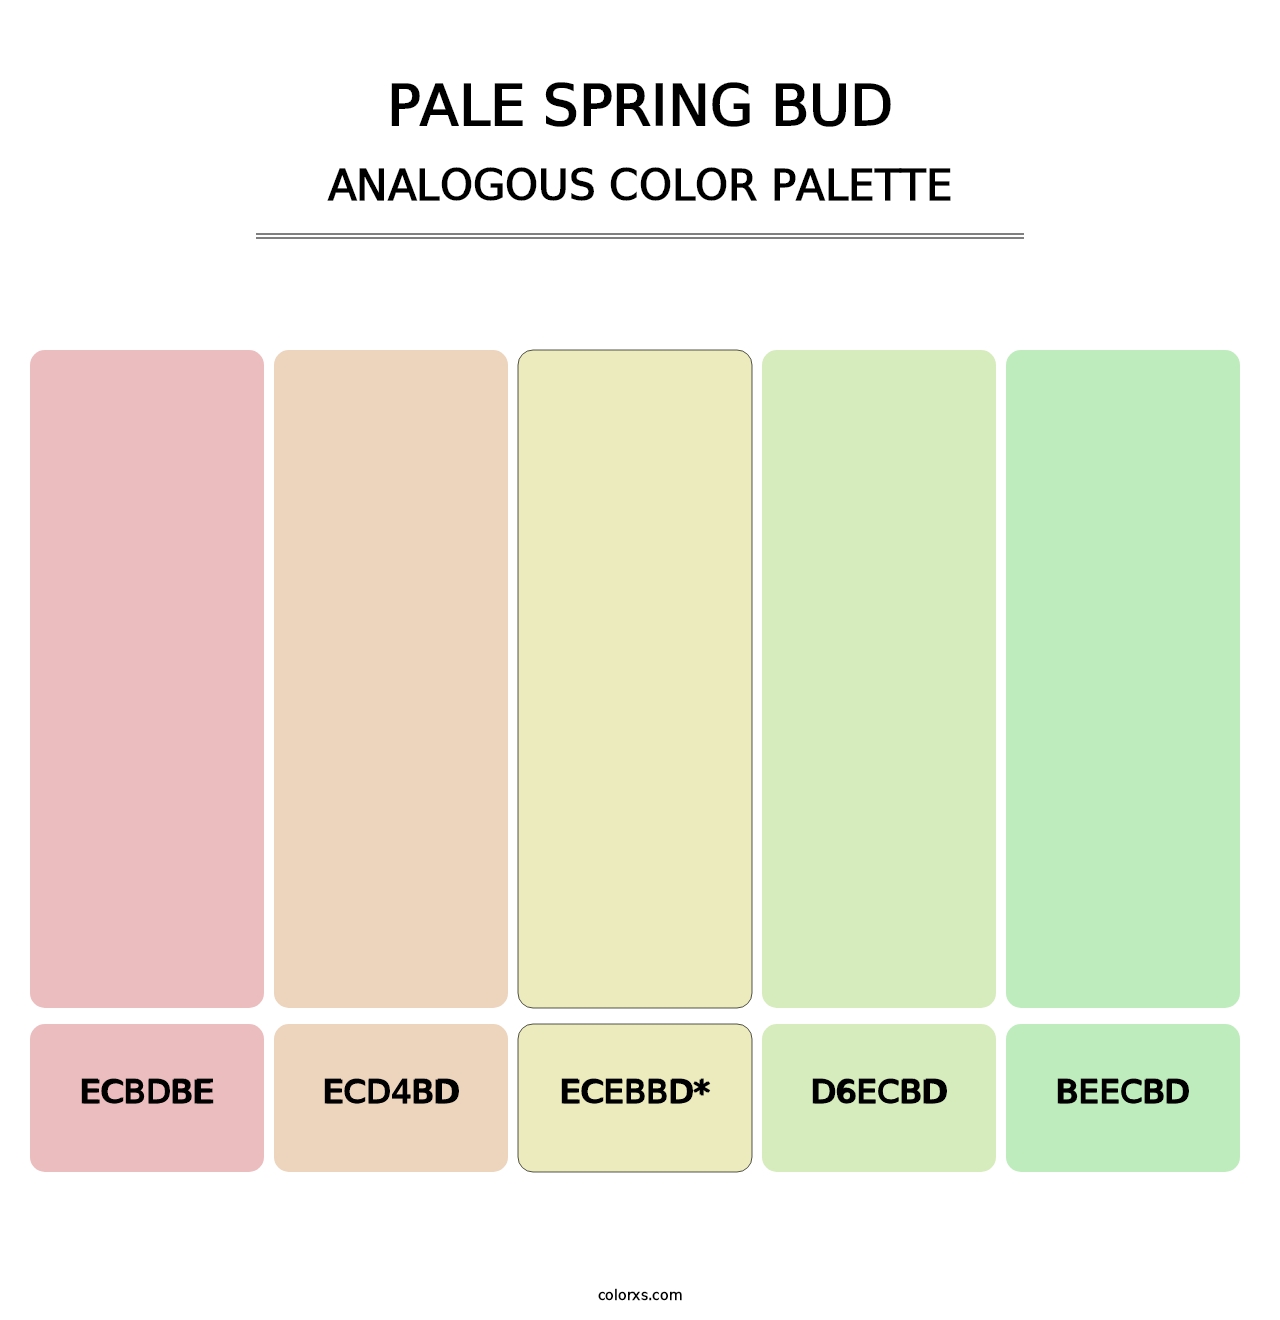 Pale Spring Bud - Analogous Color Palette